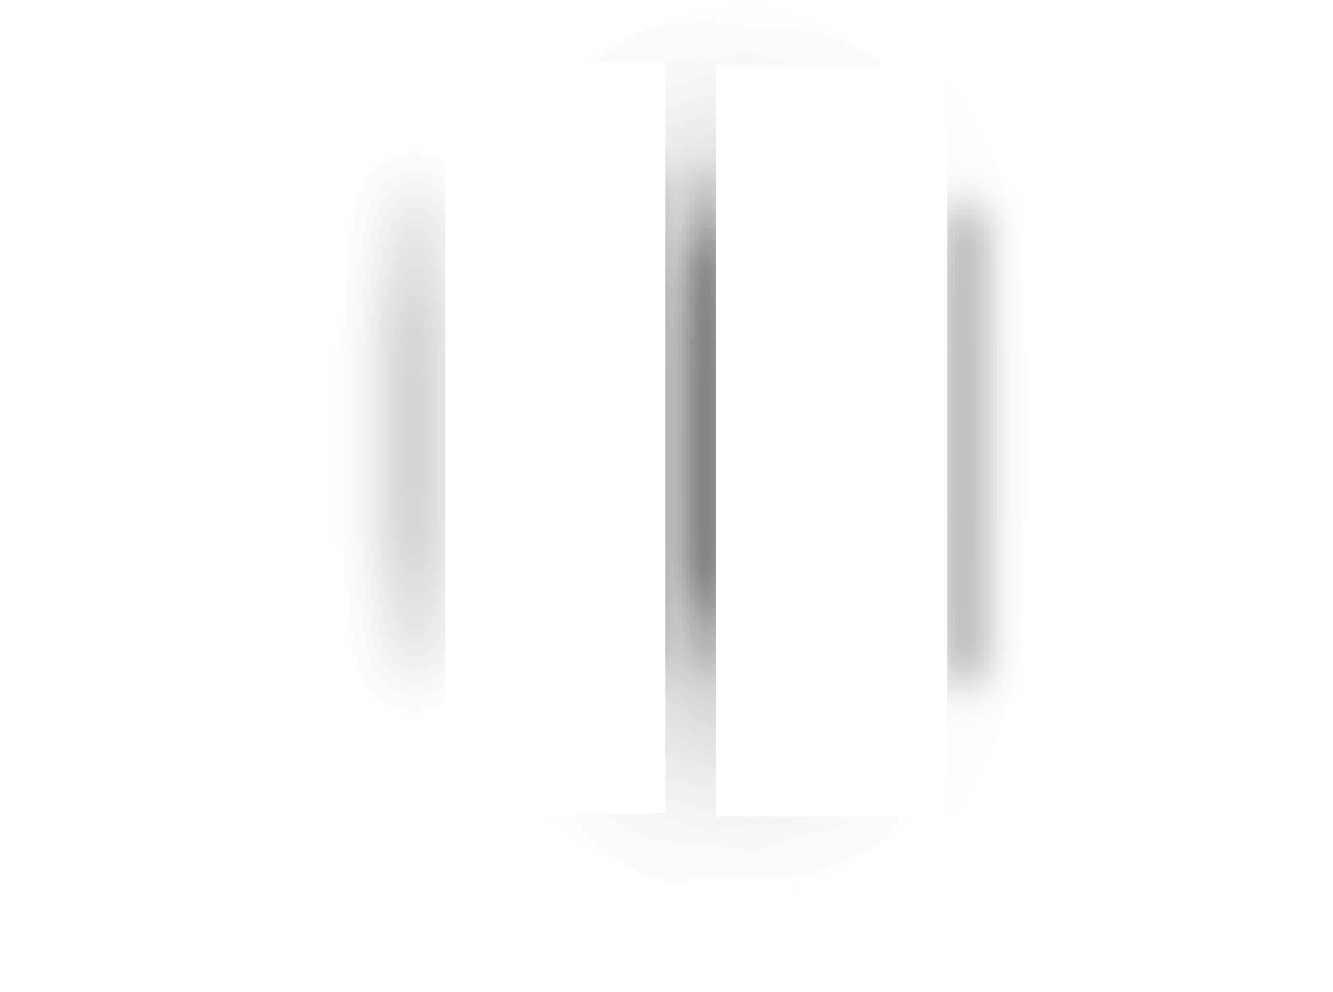 HB International Logo